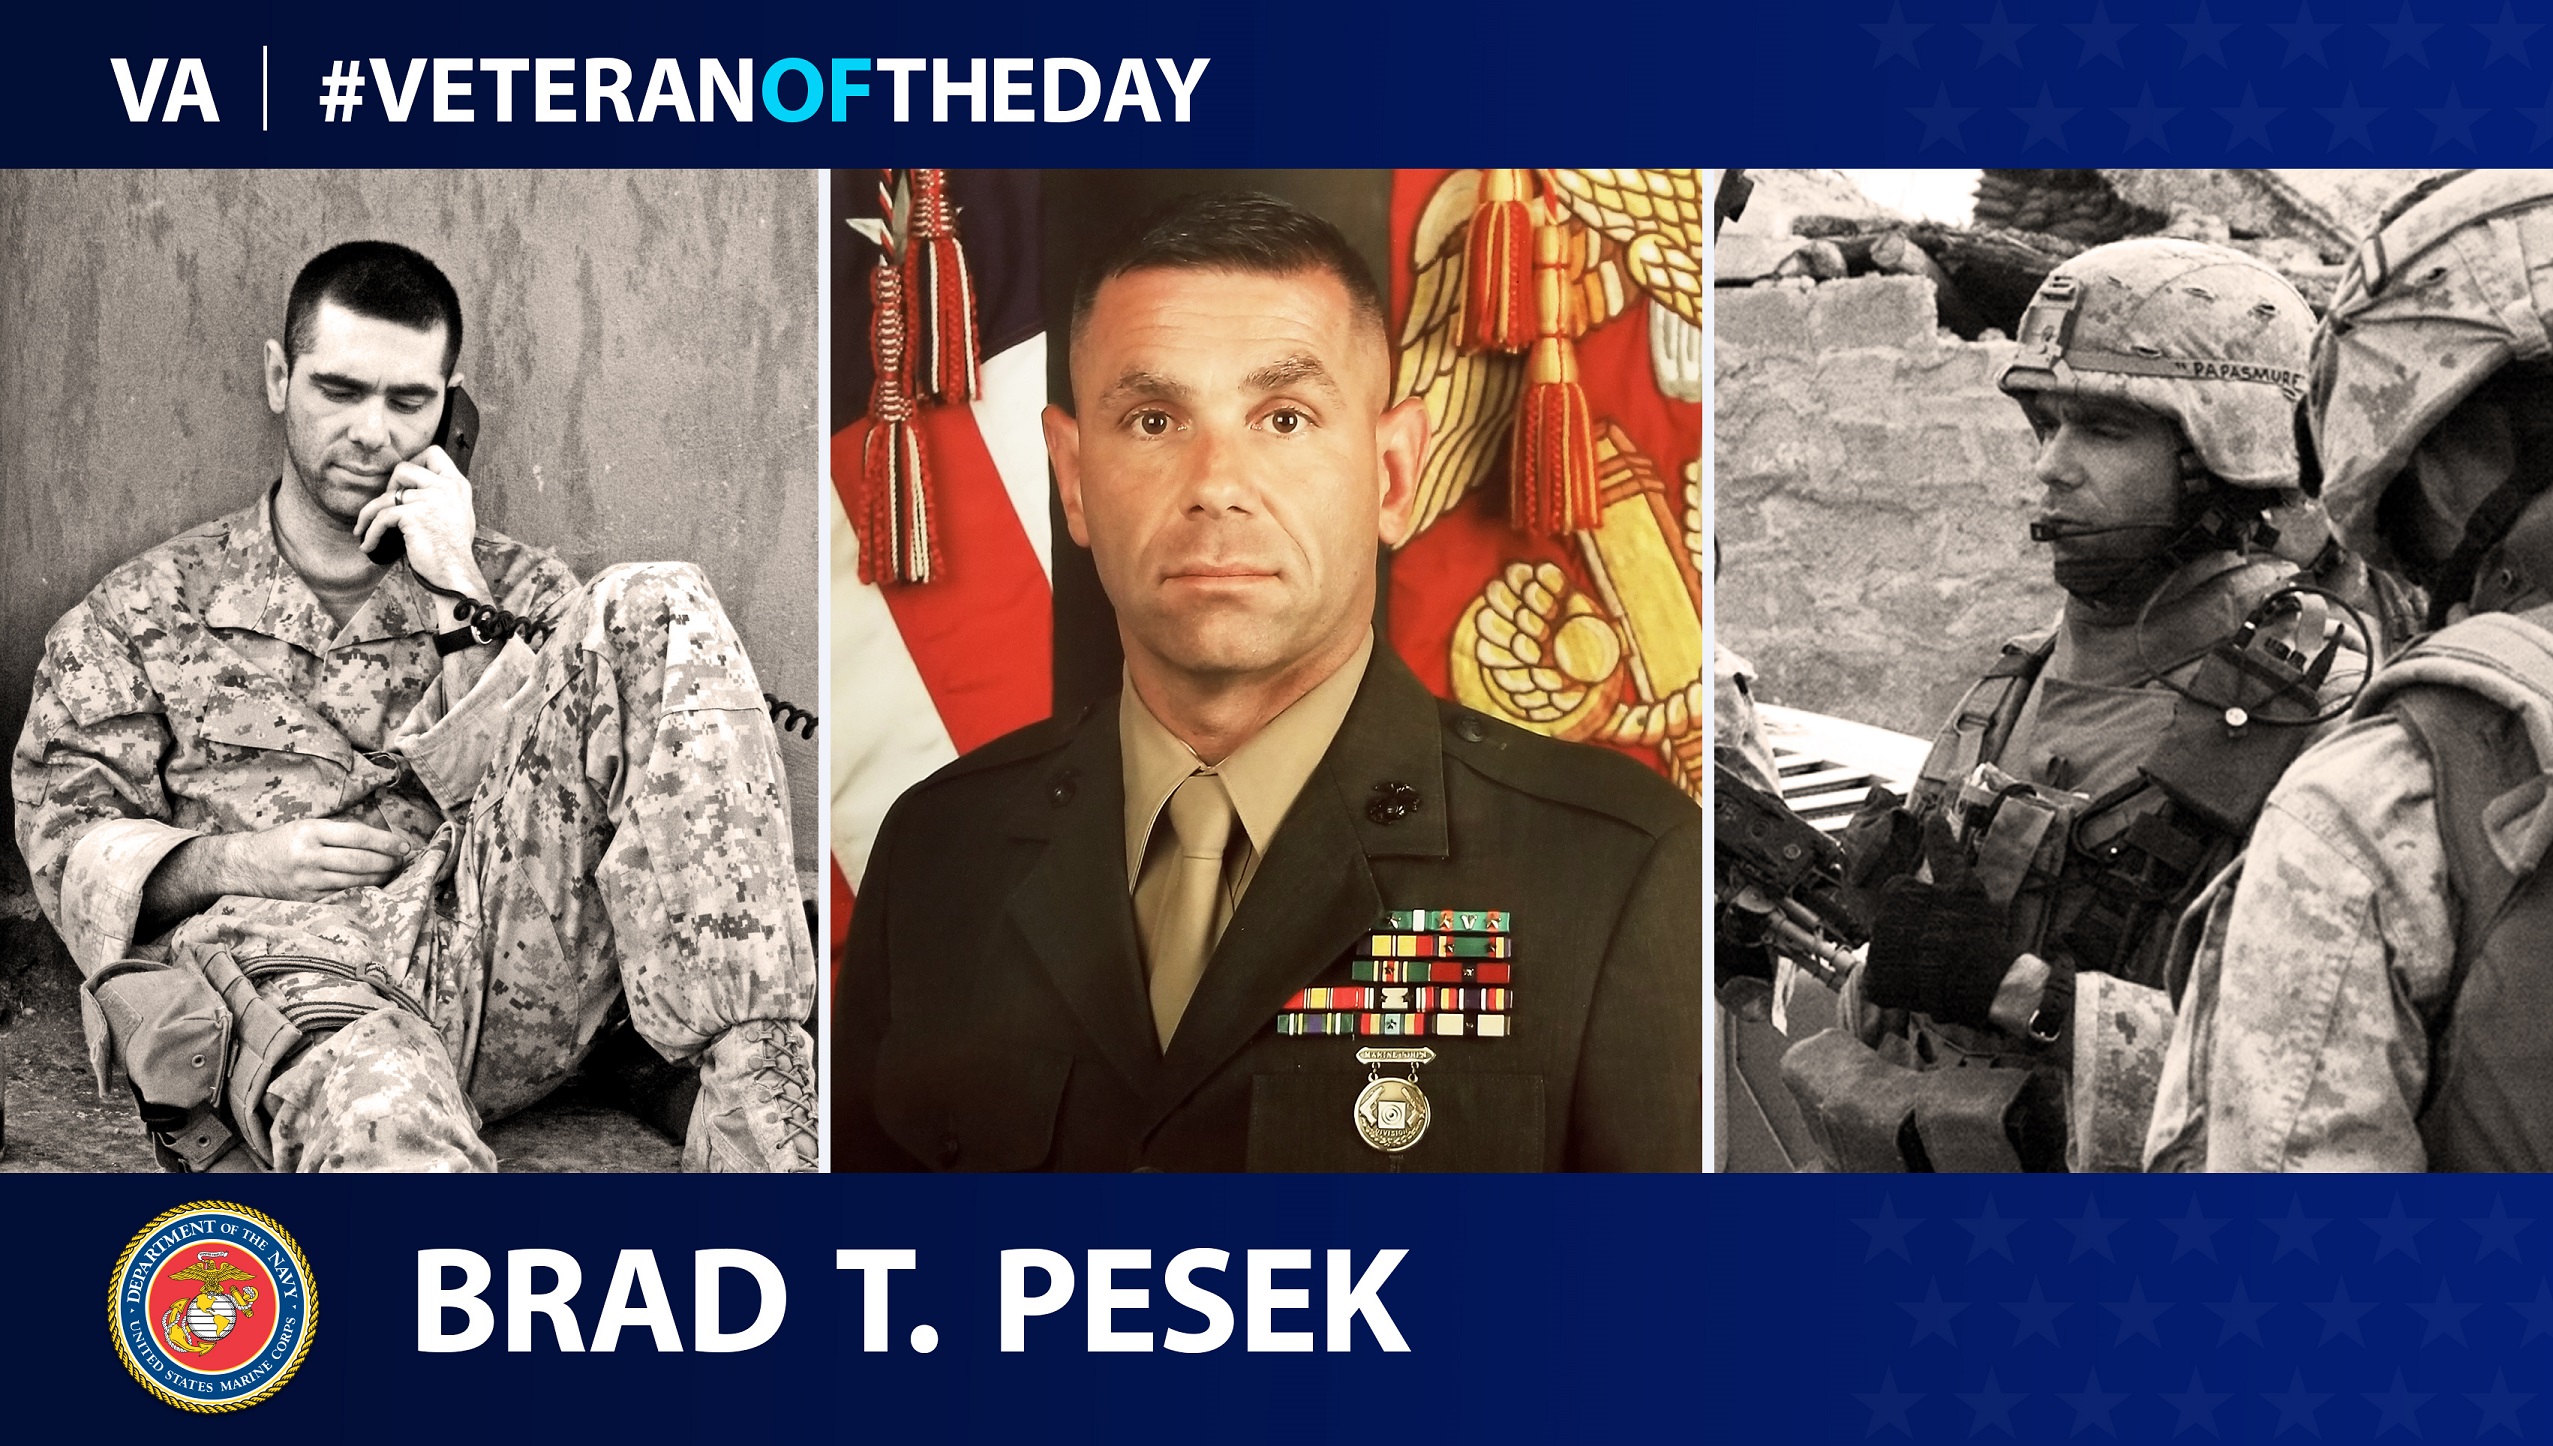 #VeteranoftheDay Brad Pesek